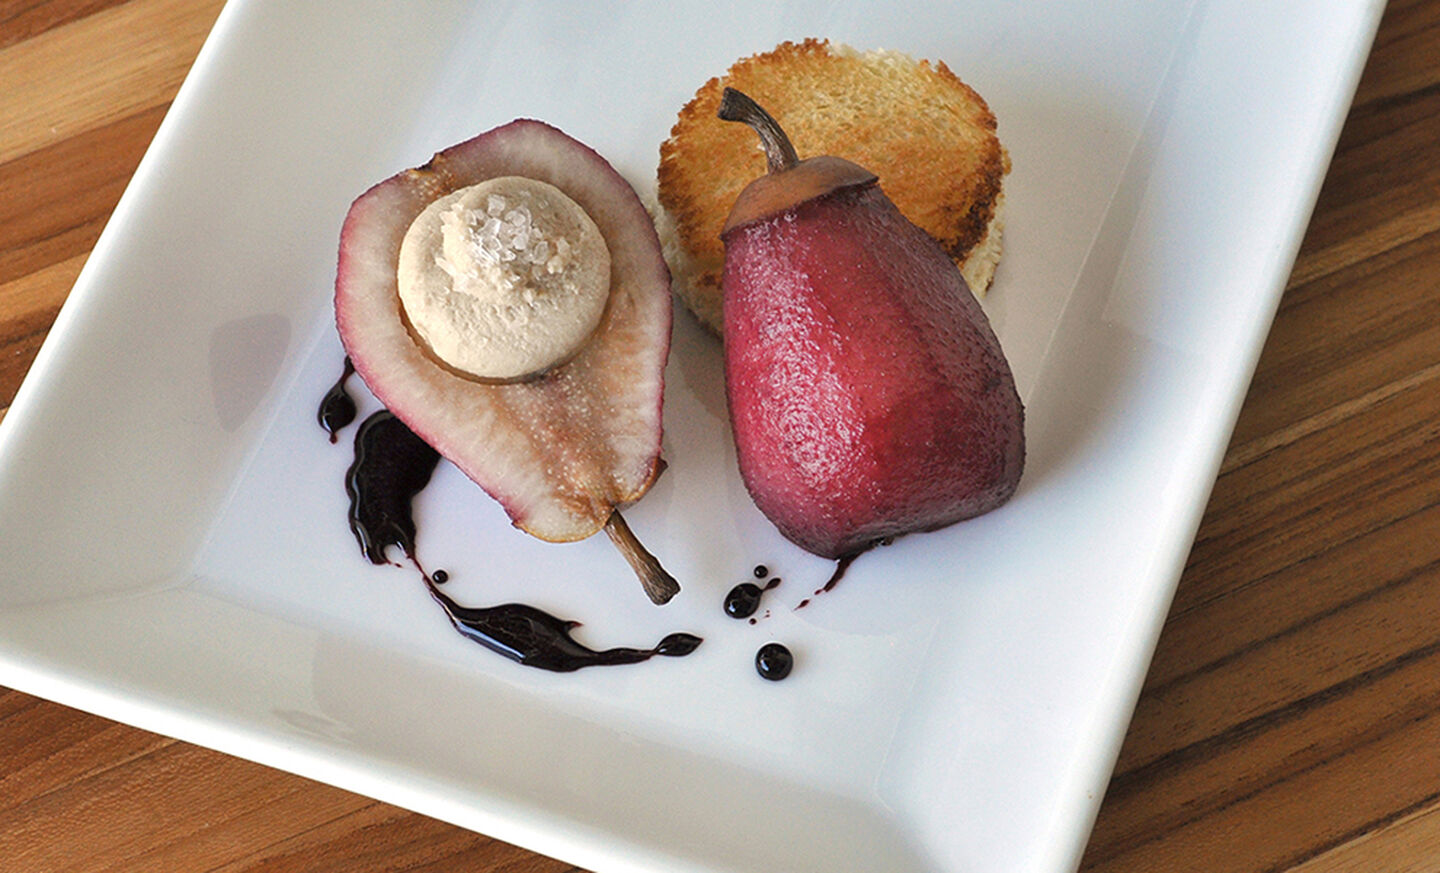 Wine Poached Pears Stuffed with Foie Gras Recipe | D’Artagnan